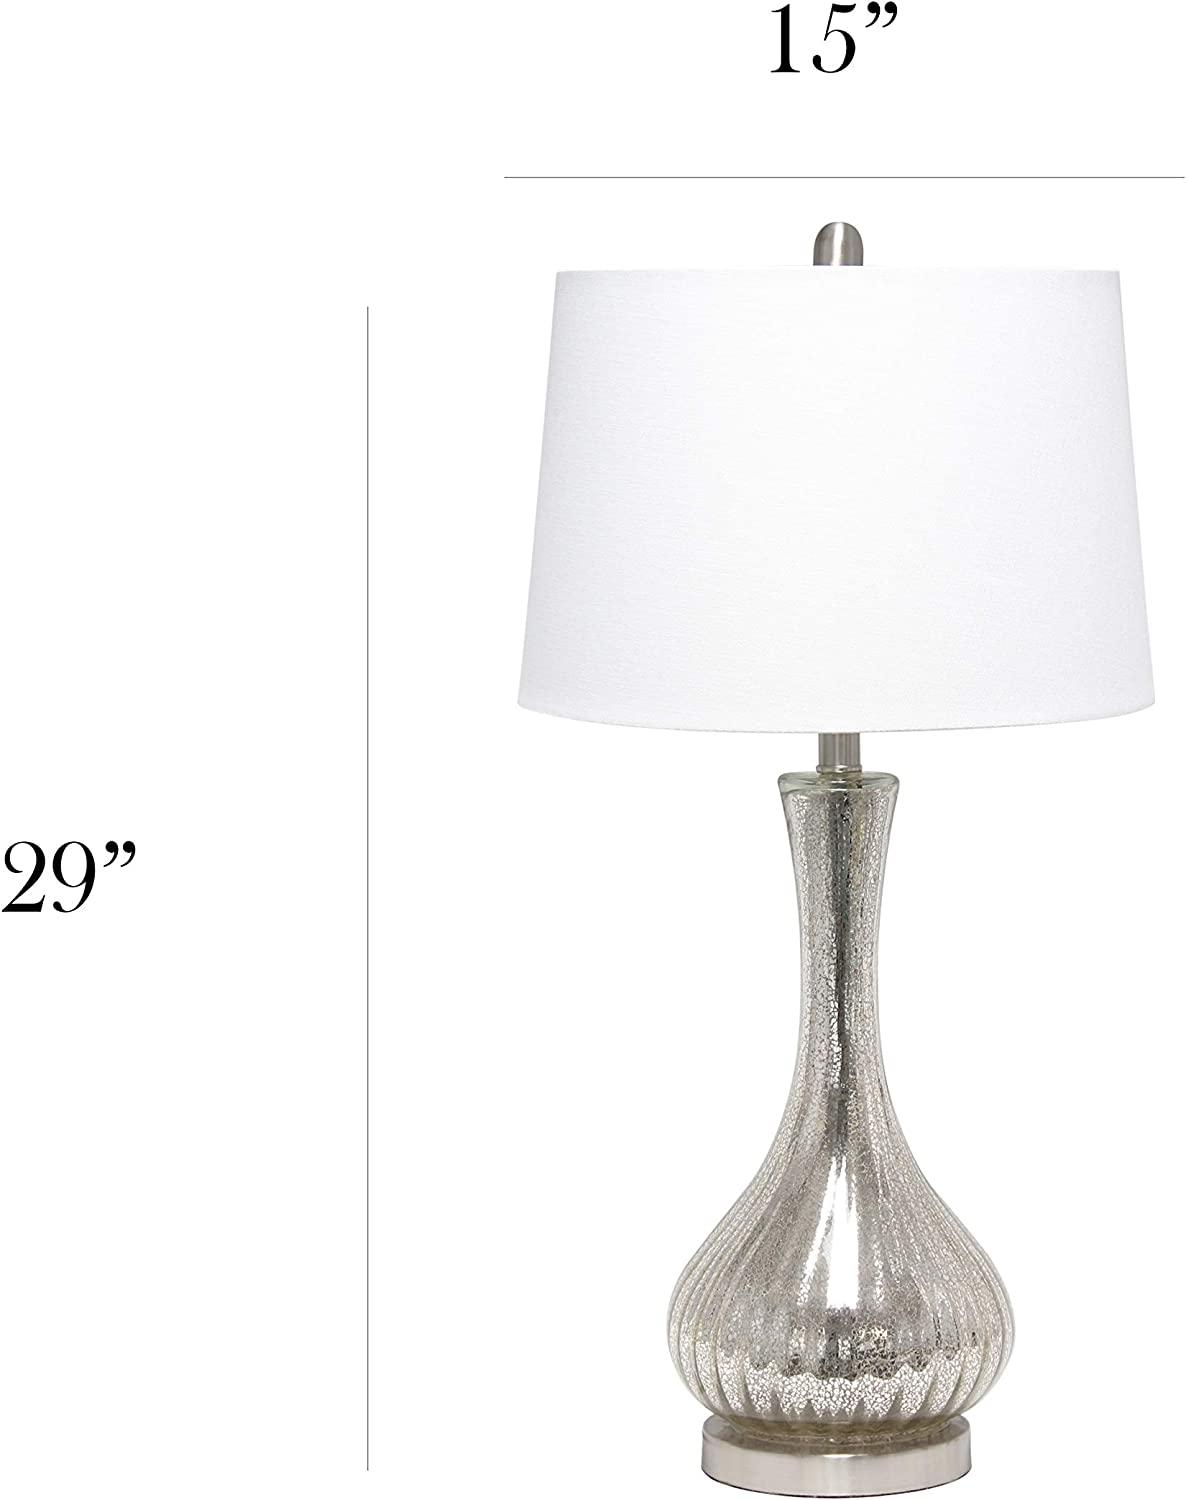 Elegant Designs LT3318-MUR Mercury Vase Table Lamp